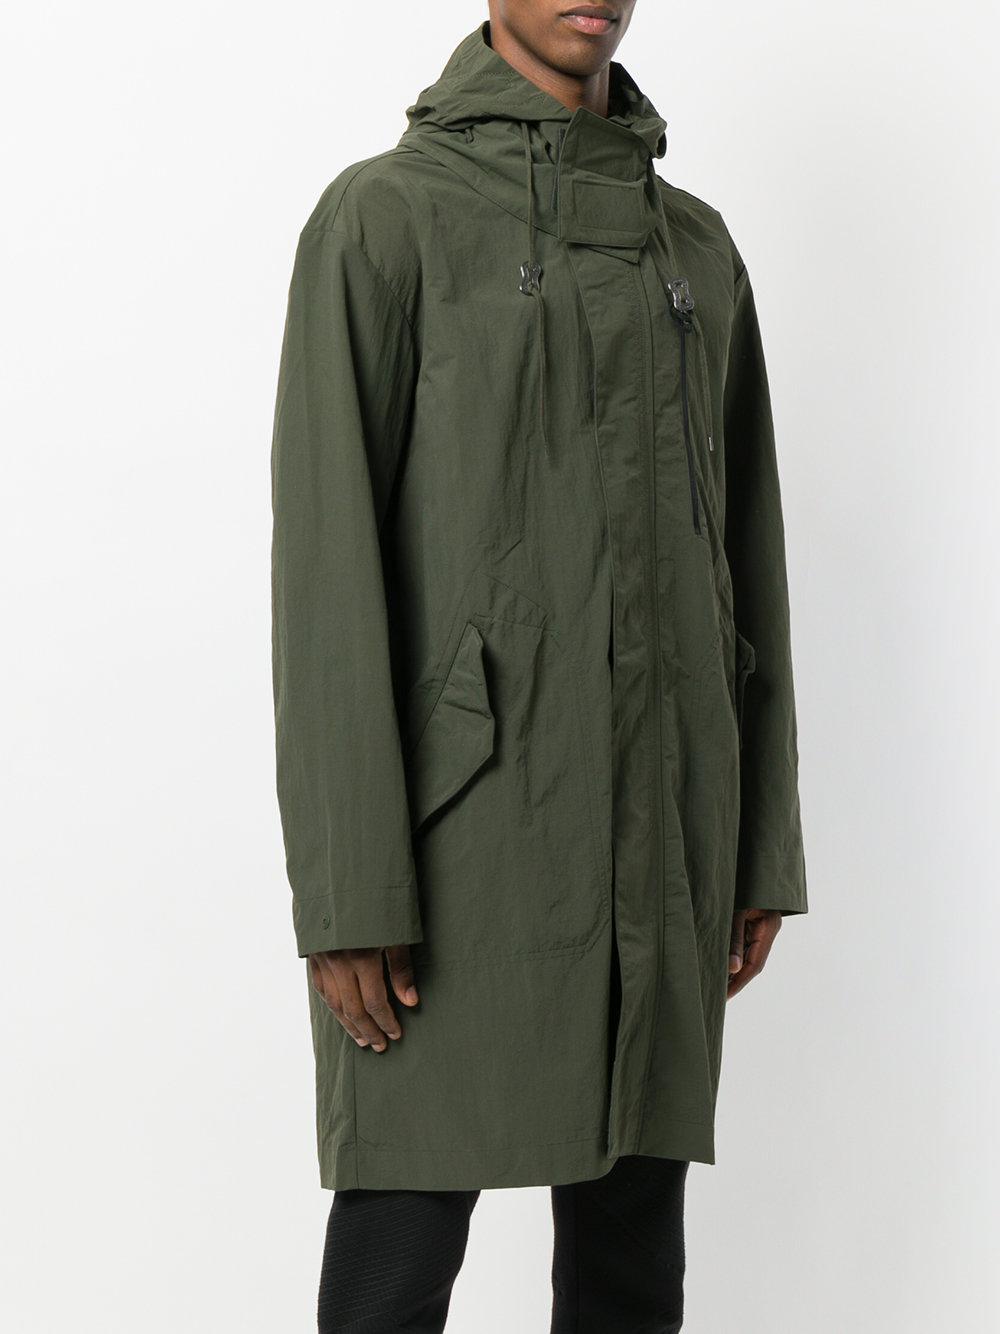 adidas Originals Nmd Parka Coat in Green for Men - Lyst